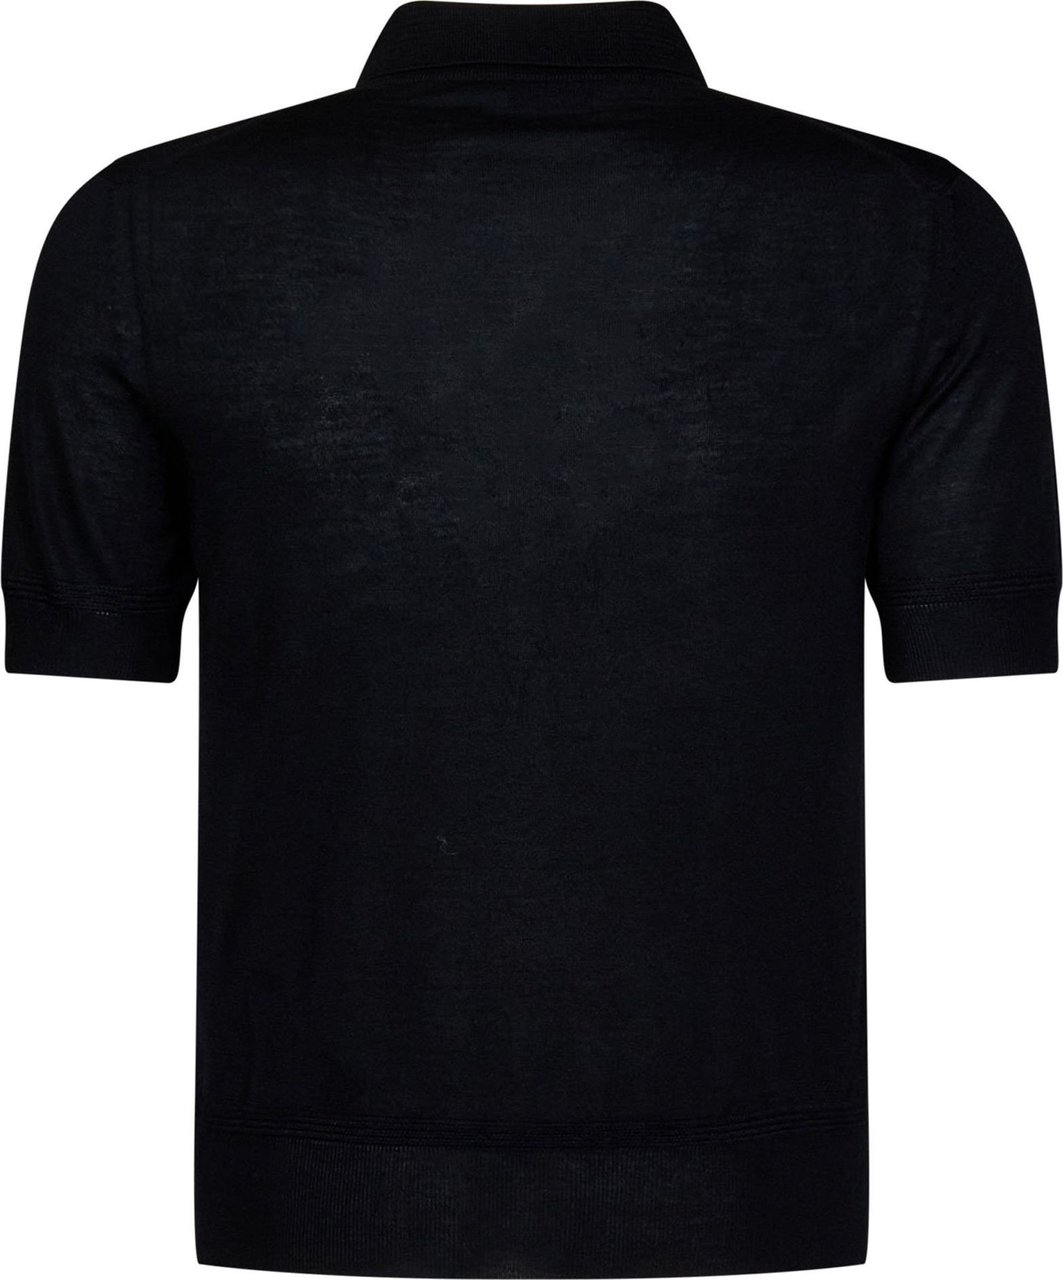 Tom Ford Tom Ford T-shirts and Polos Black Zwart